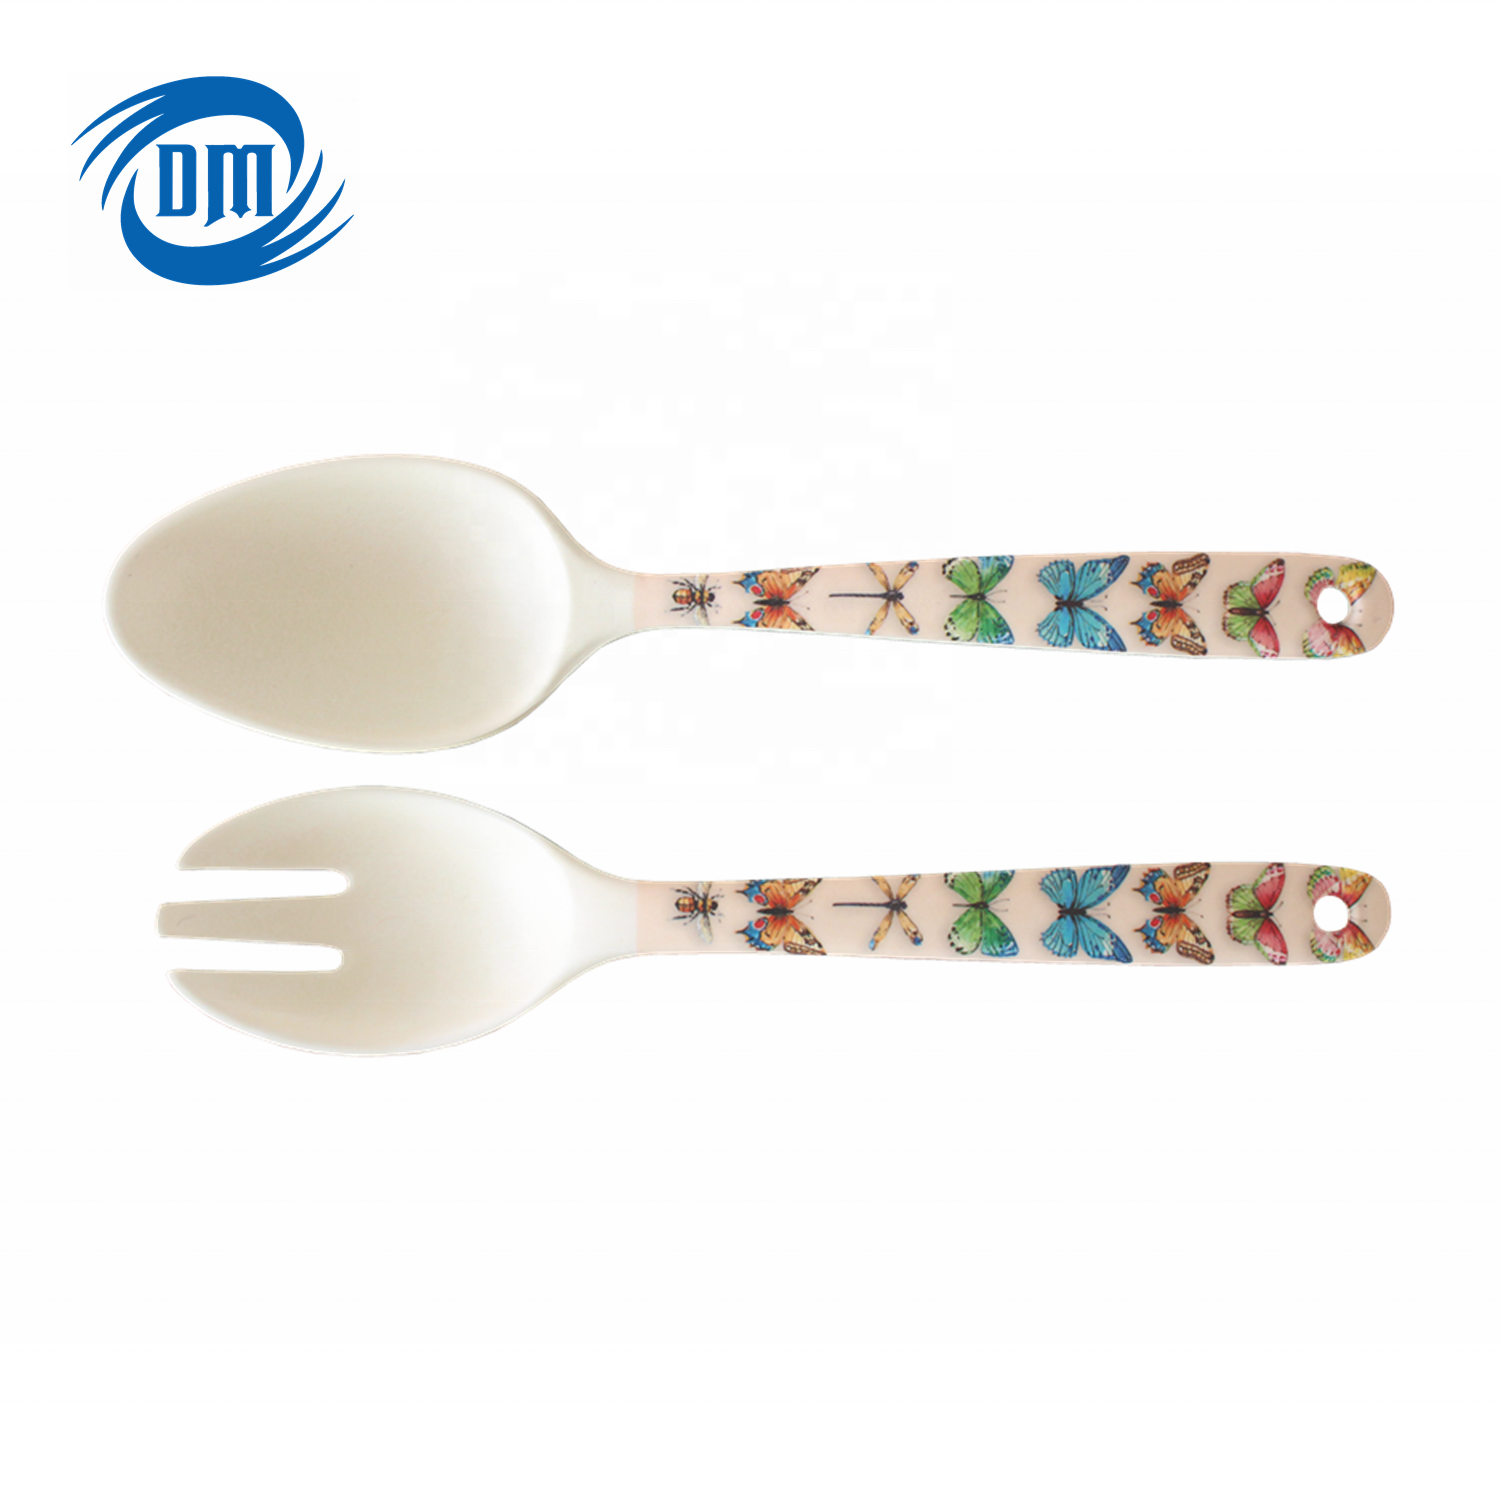 Factory directly customized bamboo fiber spoon fork set tableware dinnerware set salad spoon fork sets